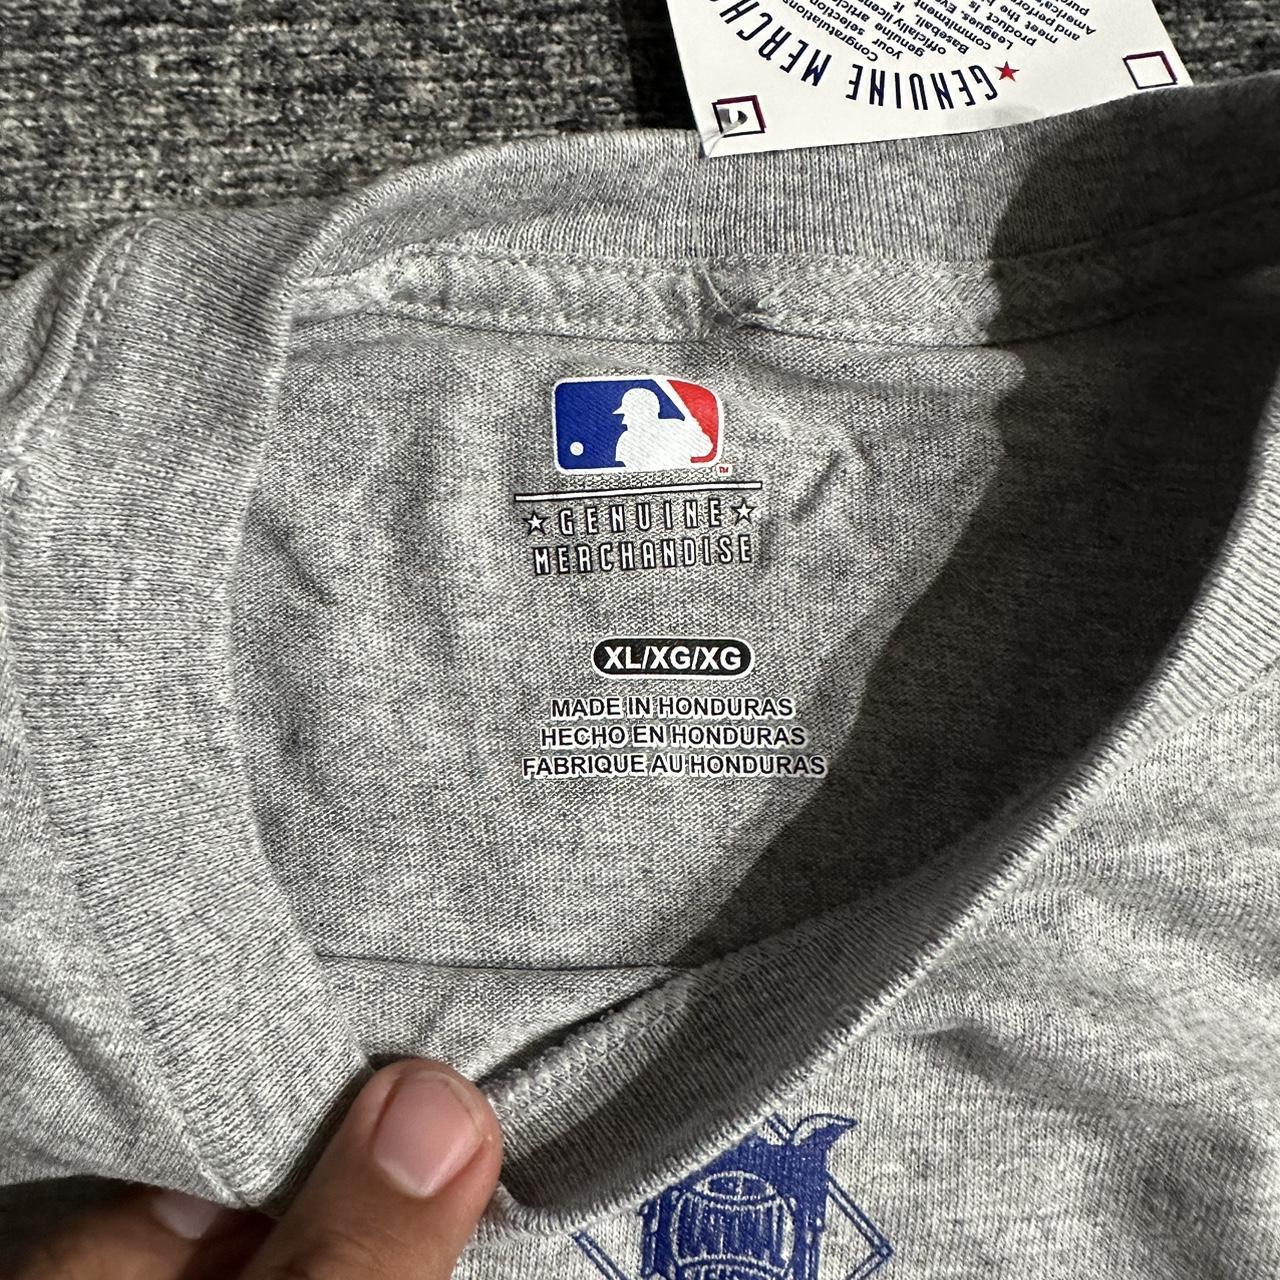 L.A. Dodgers T-Shirt Size: M Brand: New Era Color: - Depop